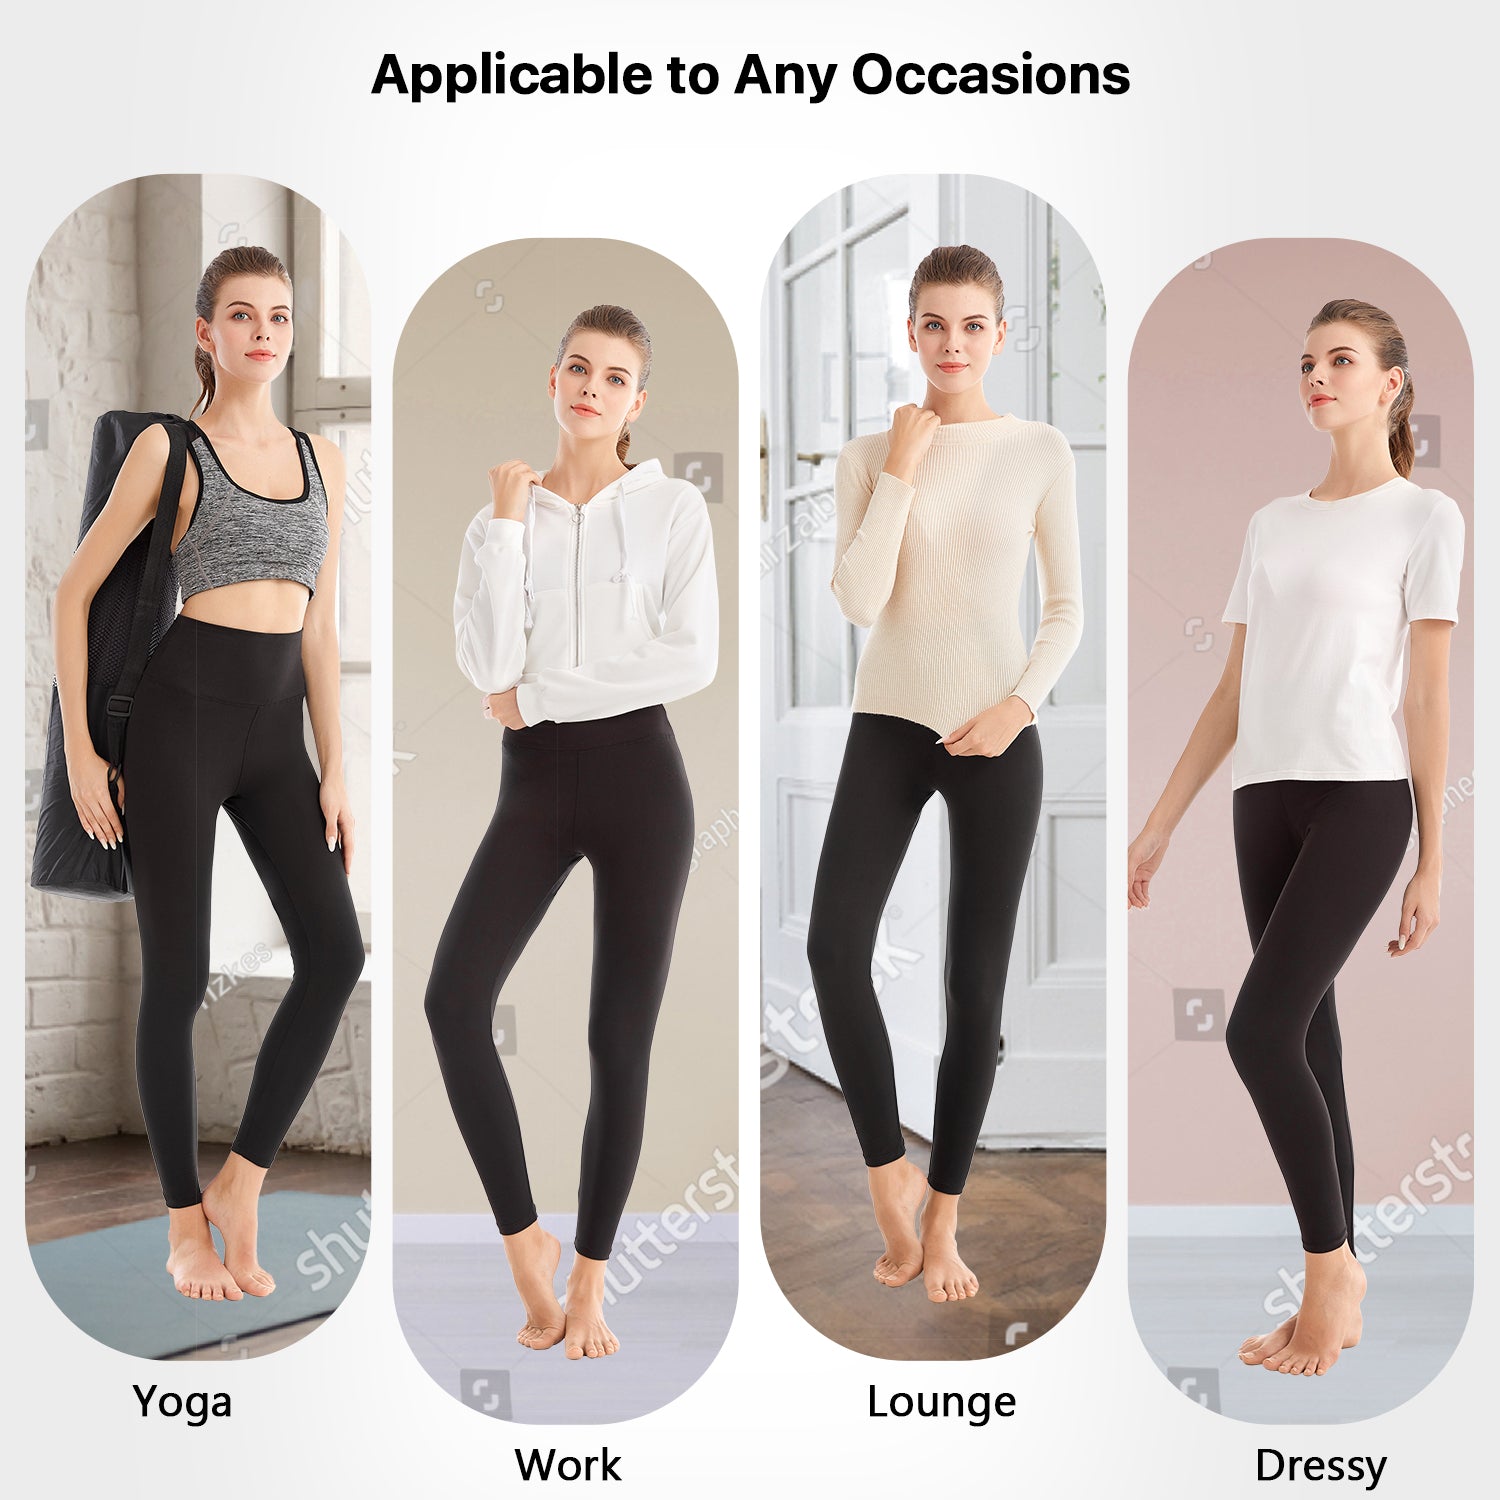 Asset By Spanx Leggingswomen's High-waist Yoga Pants - Seamless